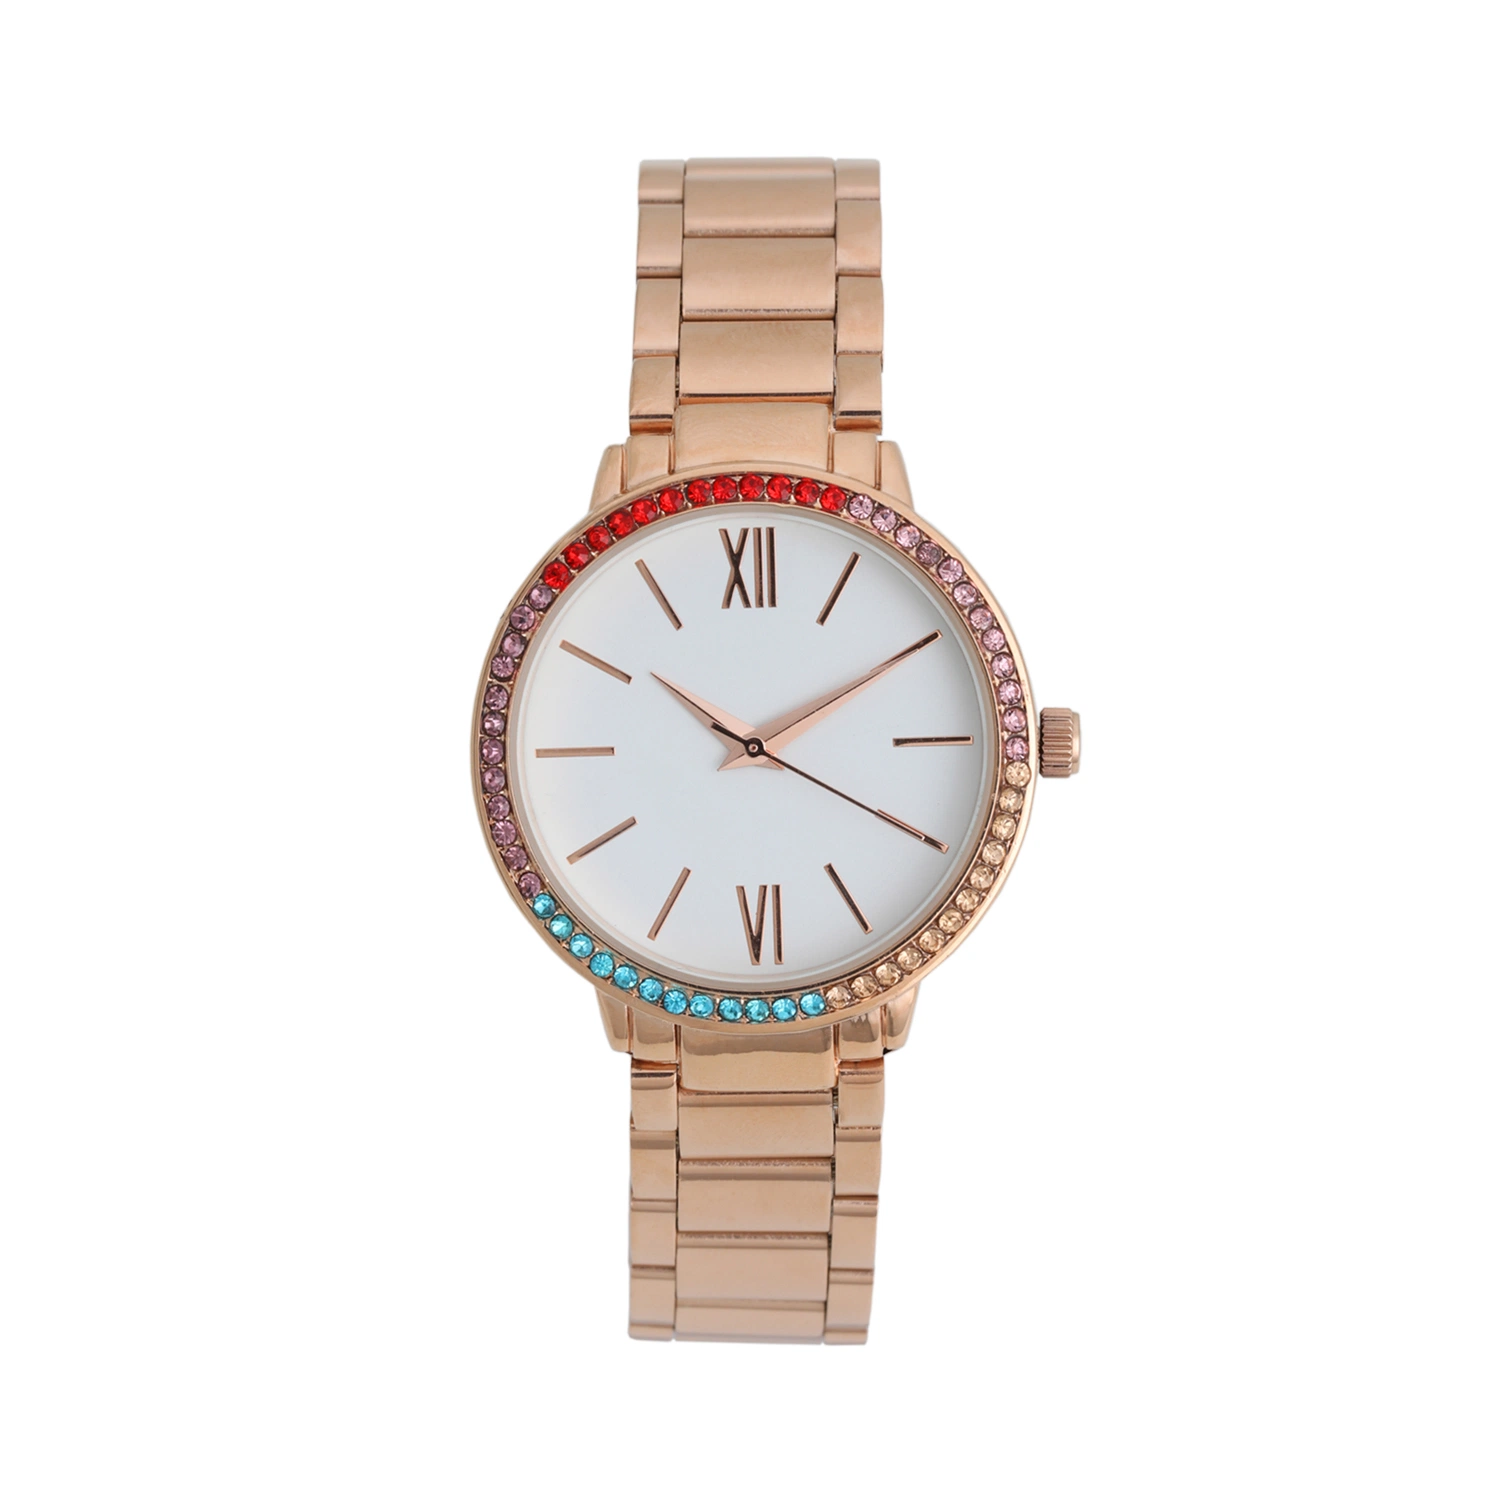 Wholesale Quality Stainless Steel Watch Gift Watch Quartz Watch Fashion Watch